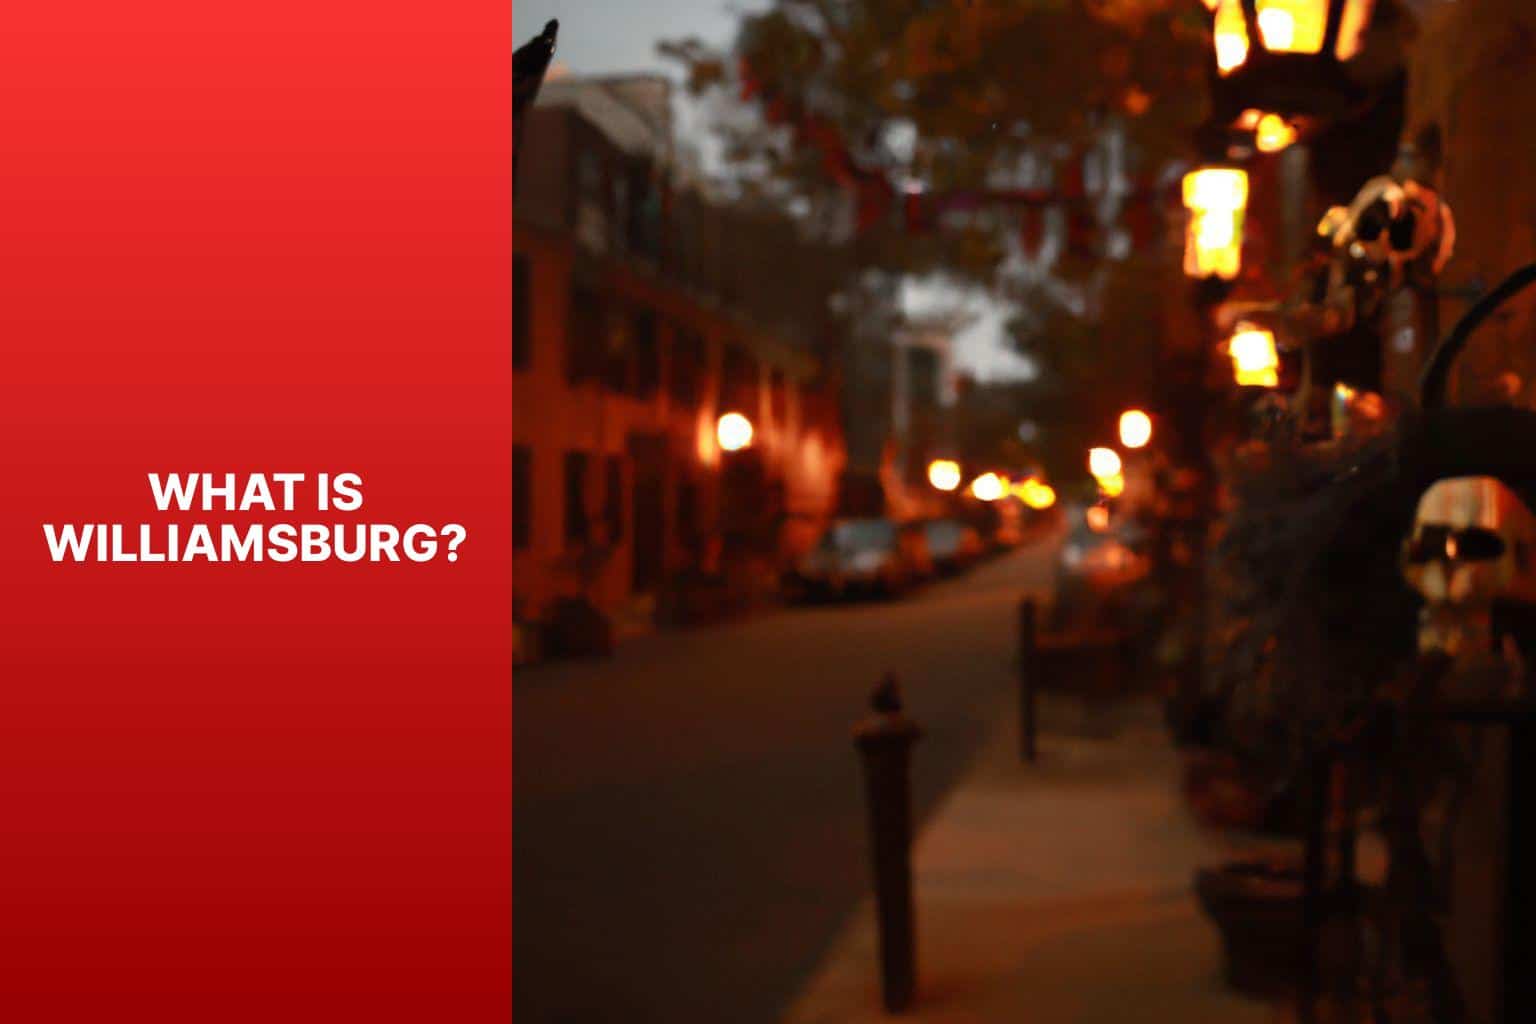 What Is Williamsburg? - halloween or williamsburg 